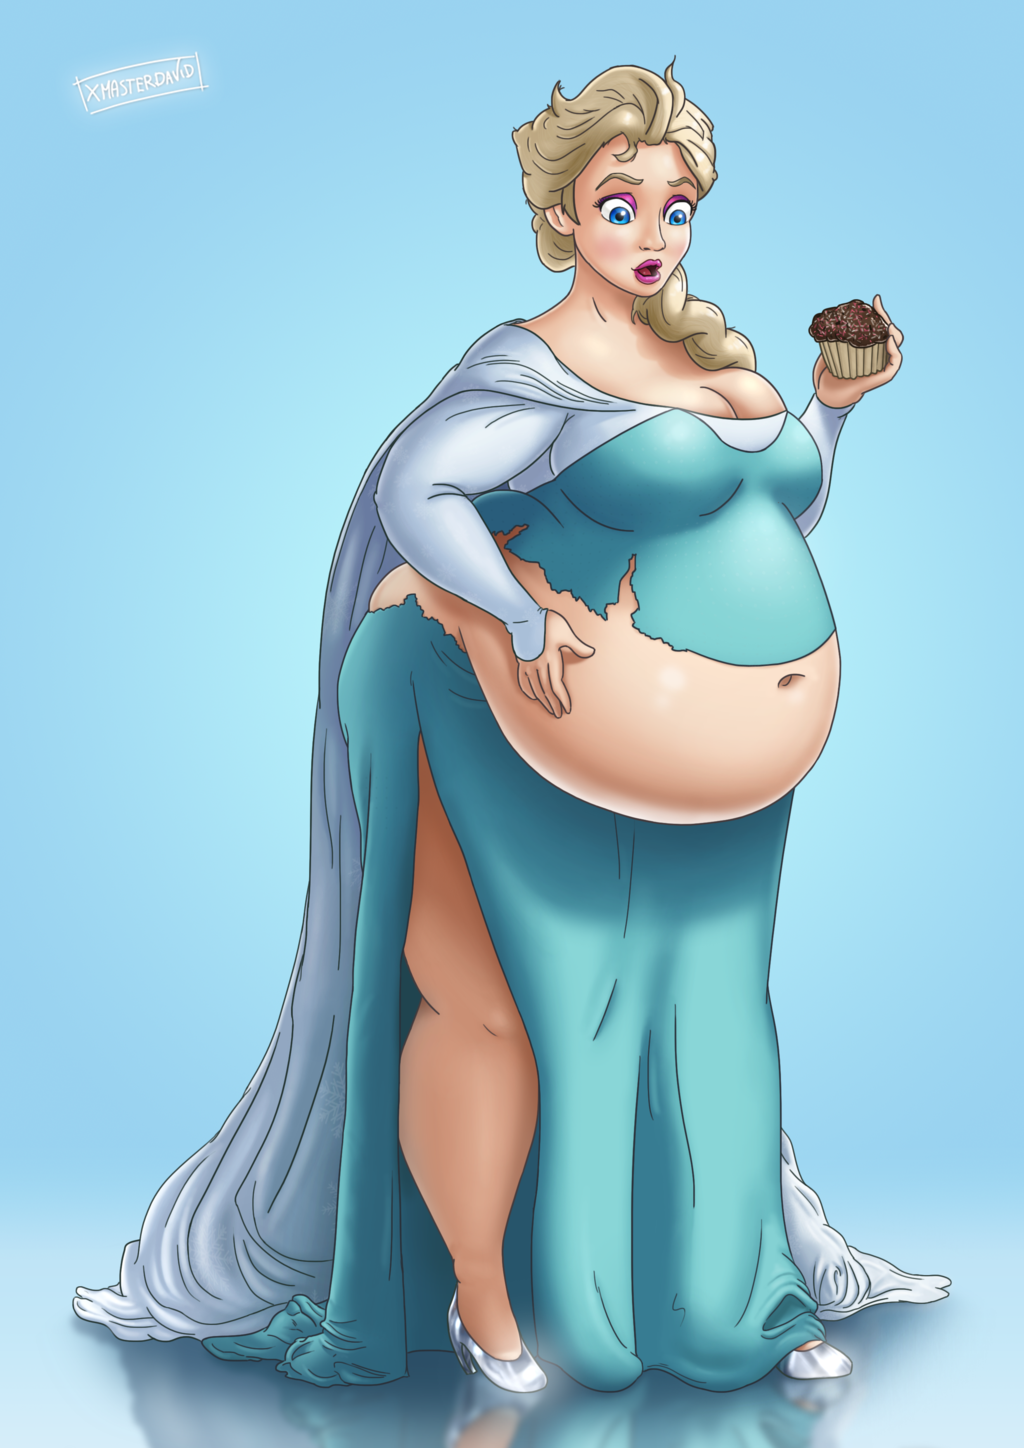 Disney princess weight gain